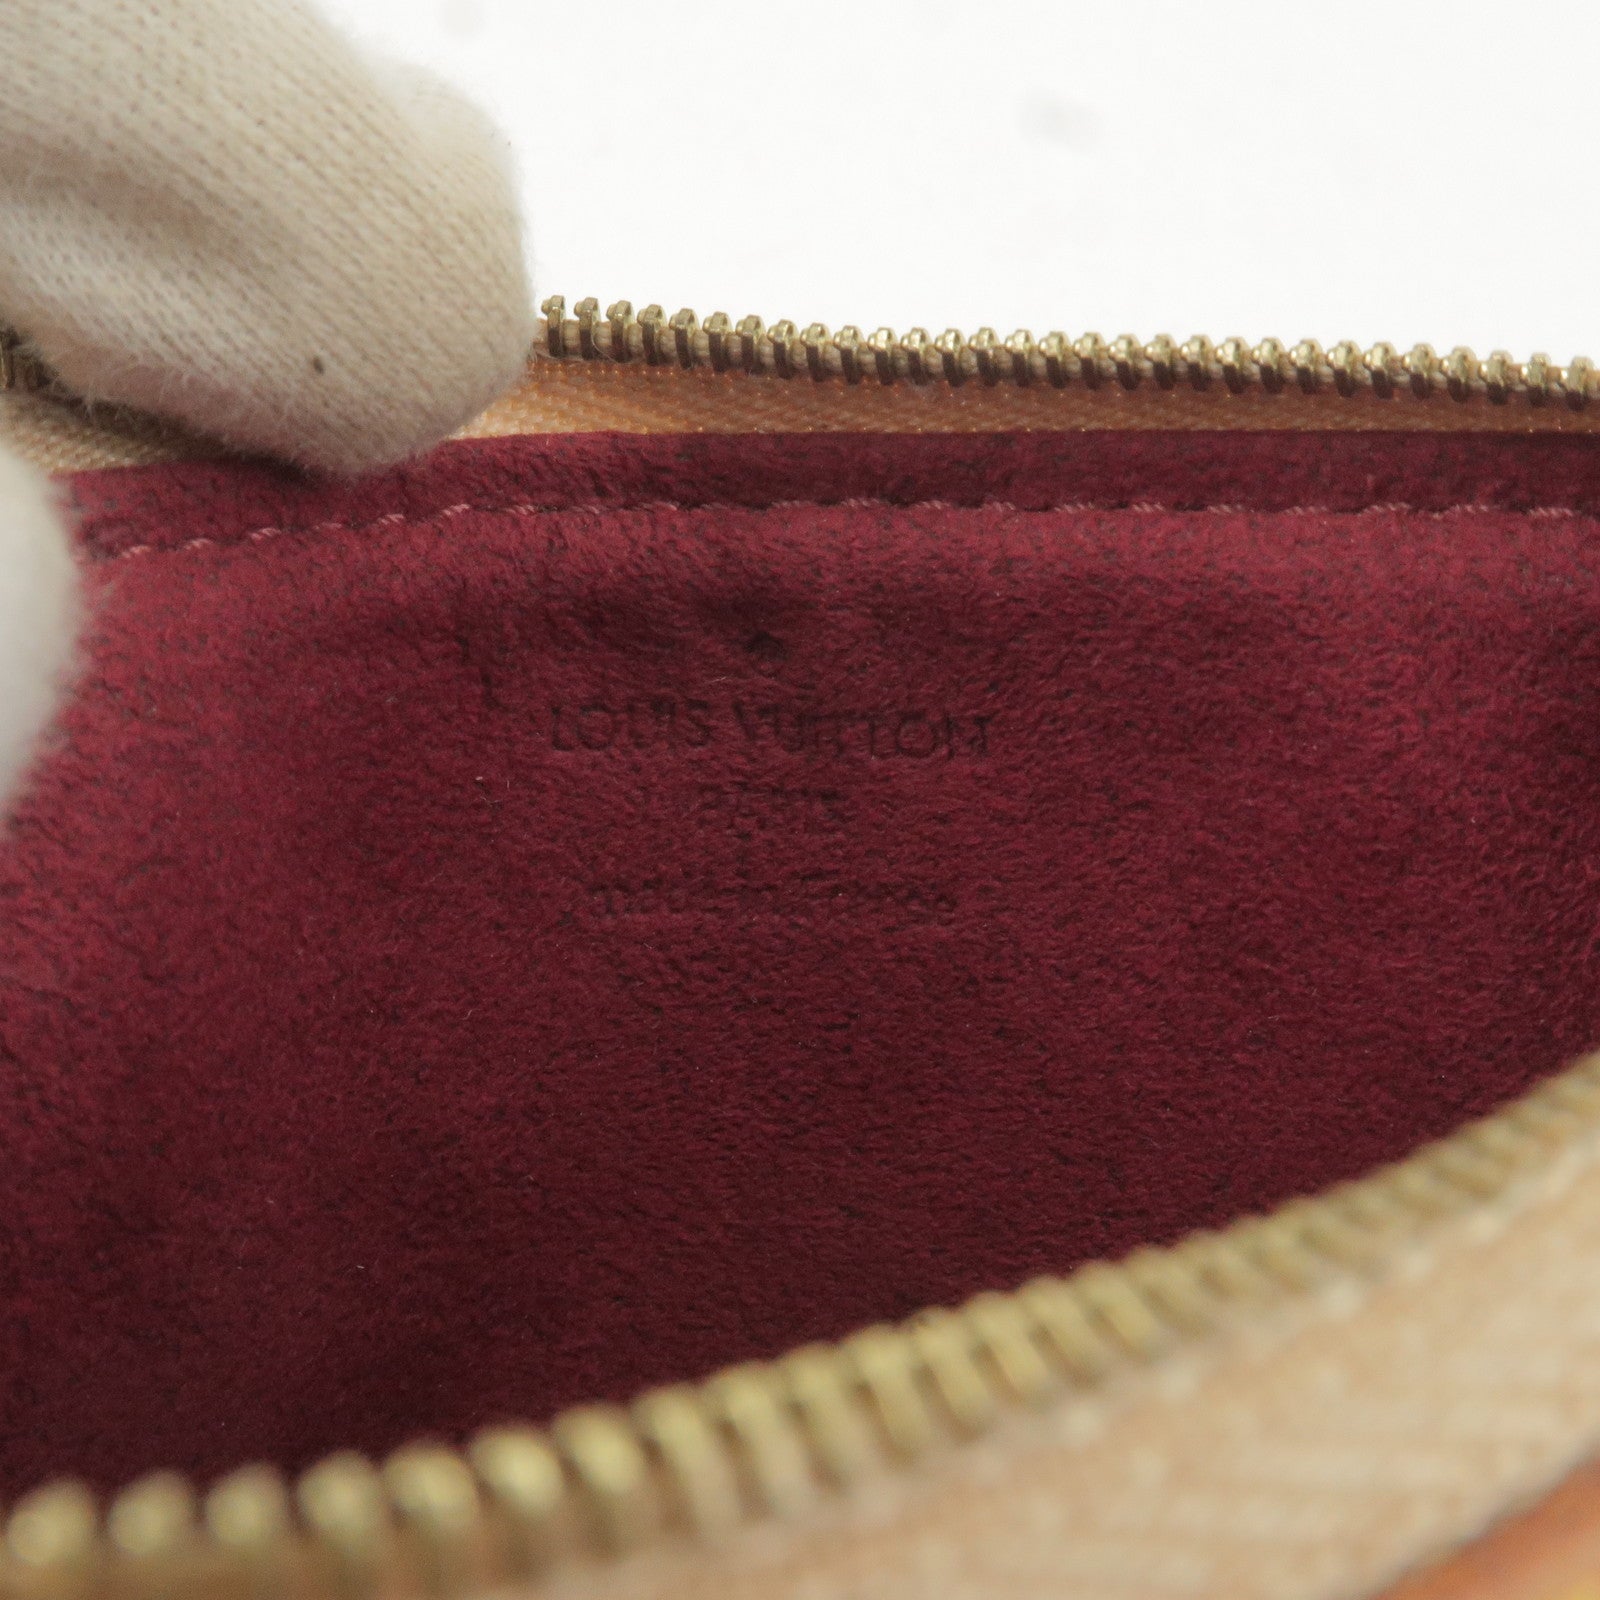 Louis Vuitton Monogram Pochette Milla PM - Brown Mini Bags